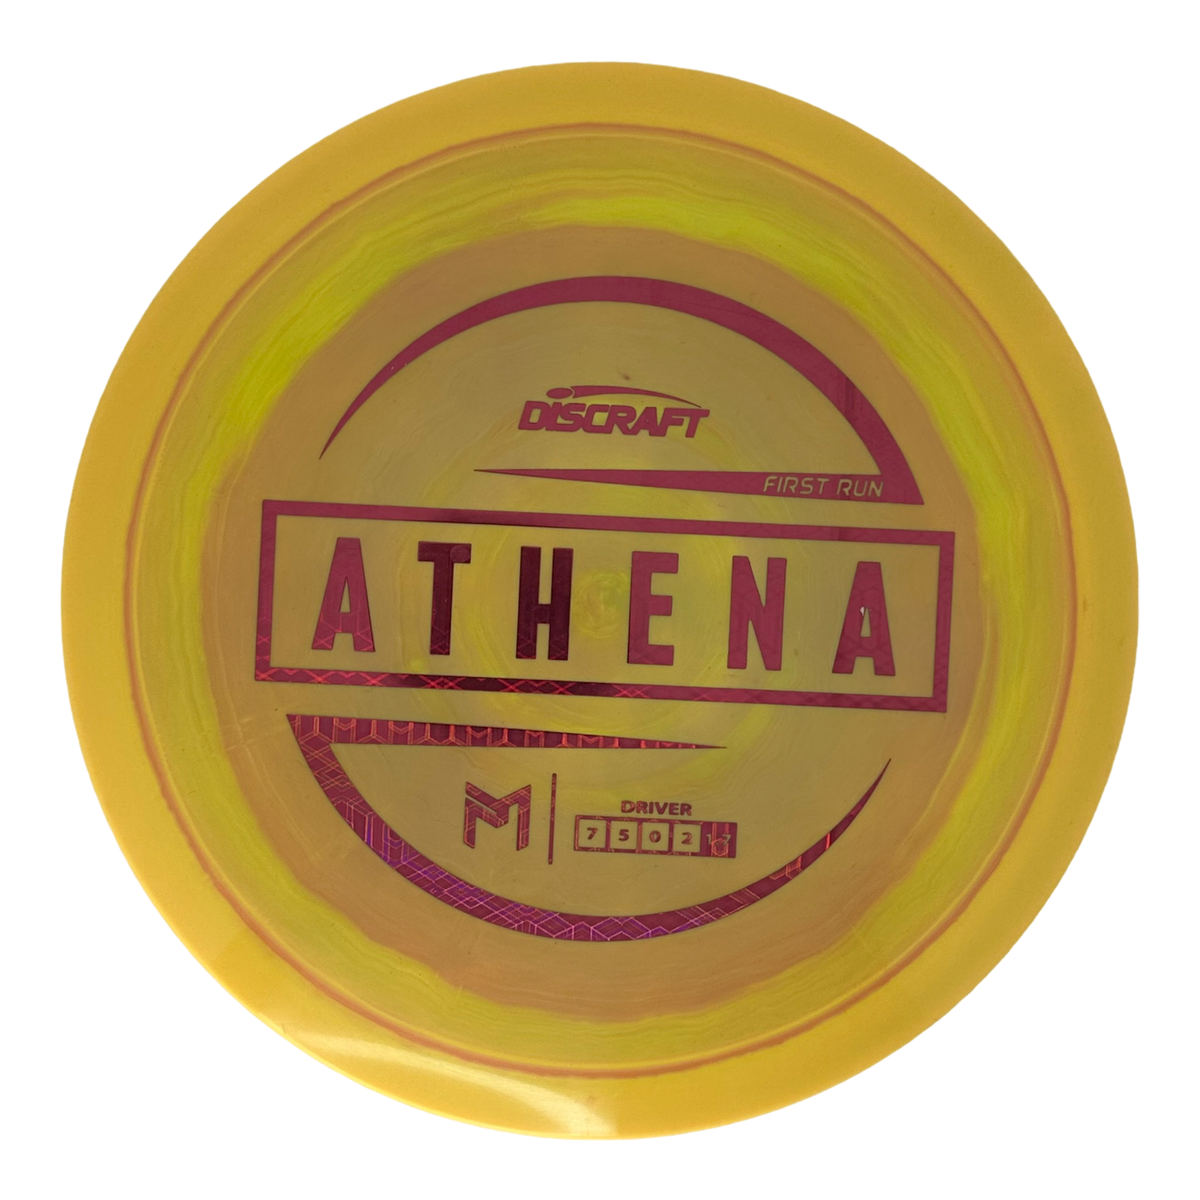 Discraft Paul McBeth ESP Athena - First Run